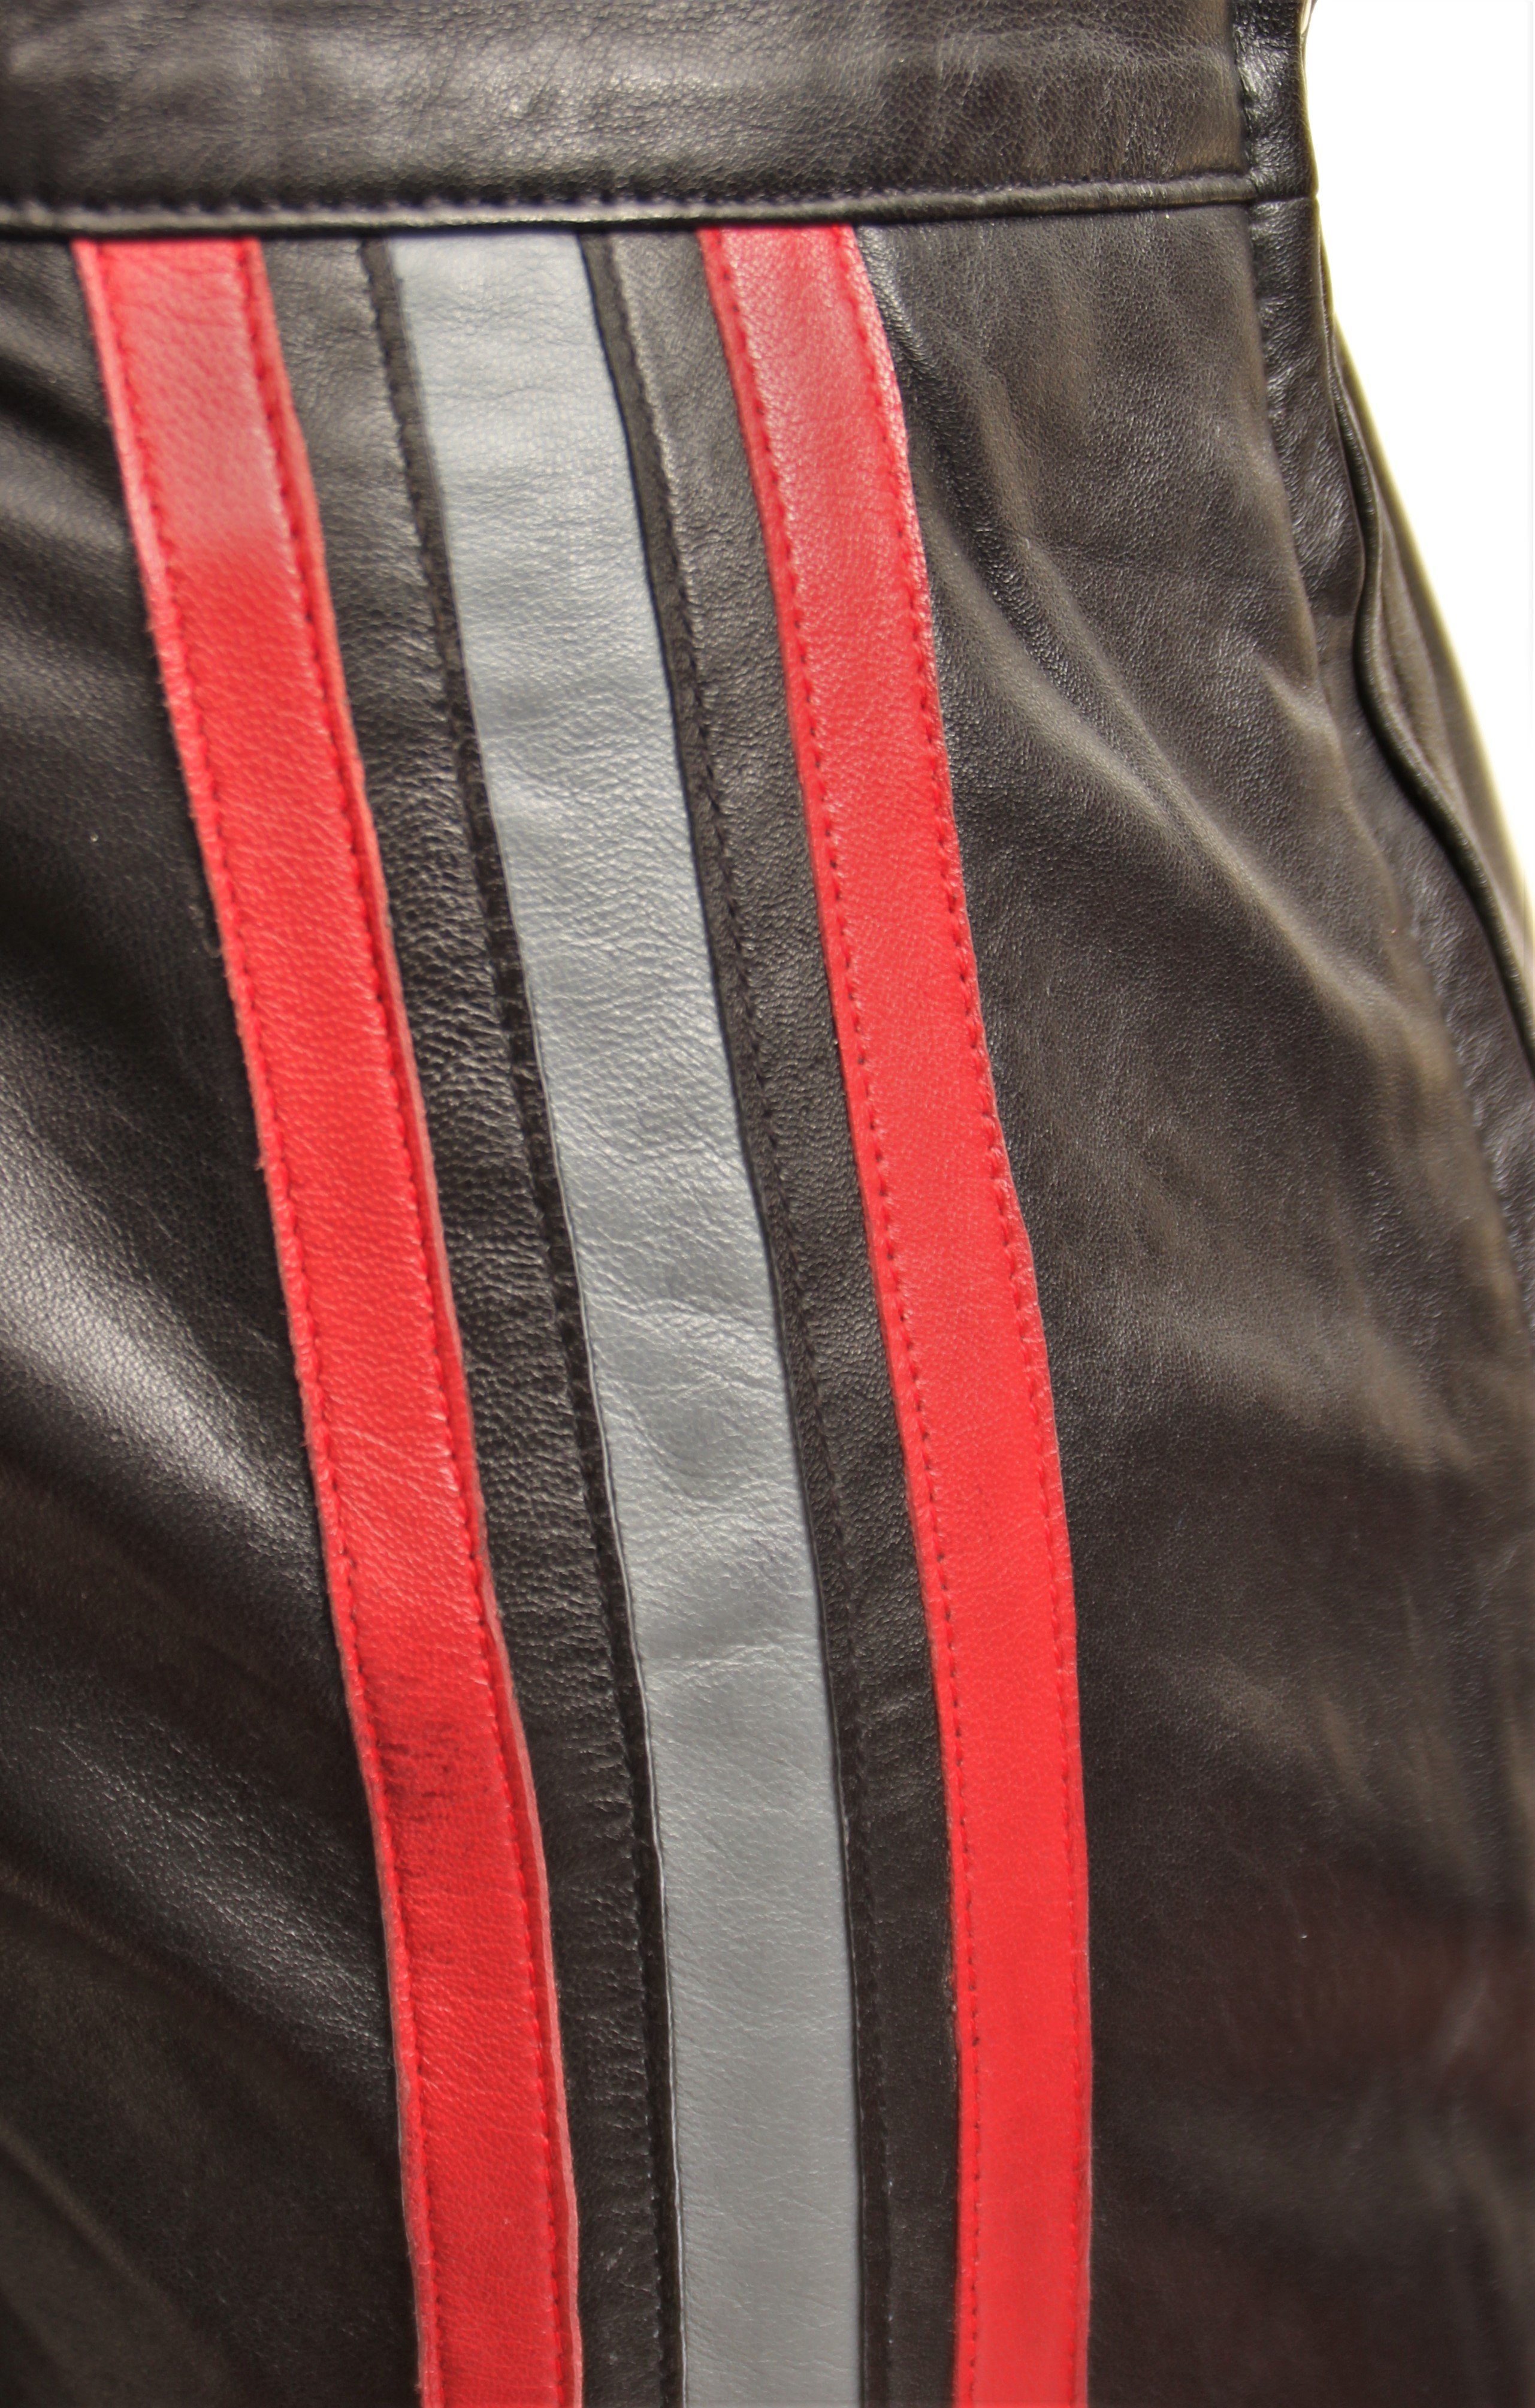 mit Aspen Be grauen Lederhose Streifen Lederhose rot ausgestellte Noble Leicht